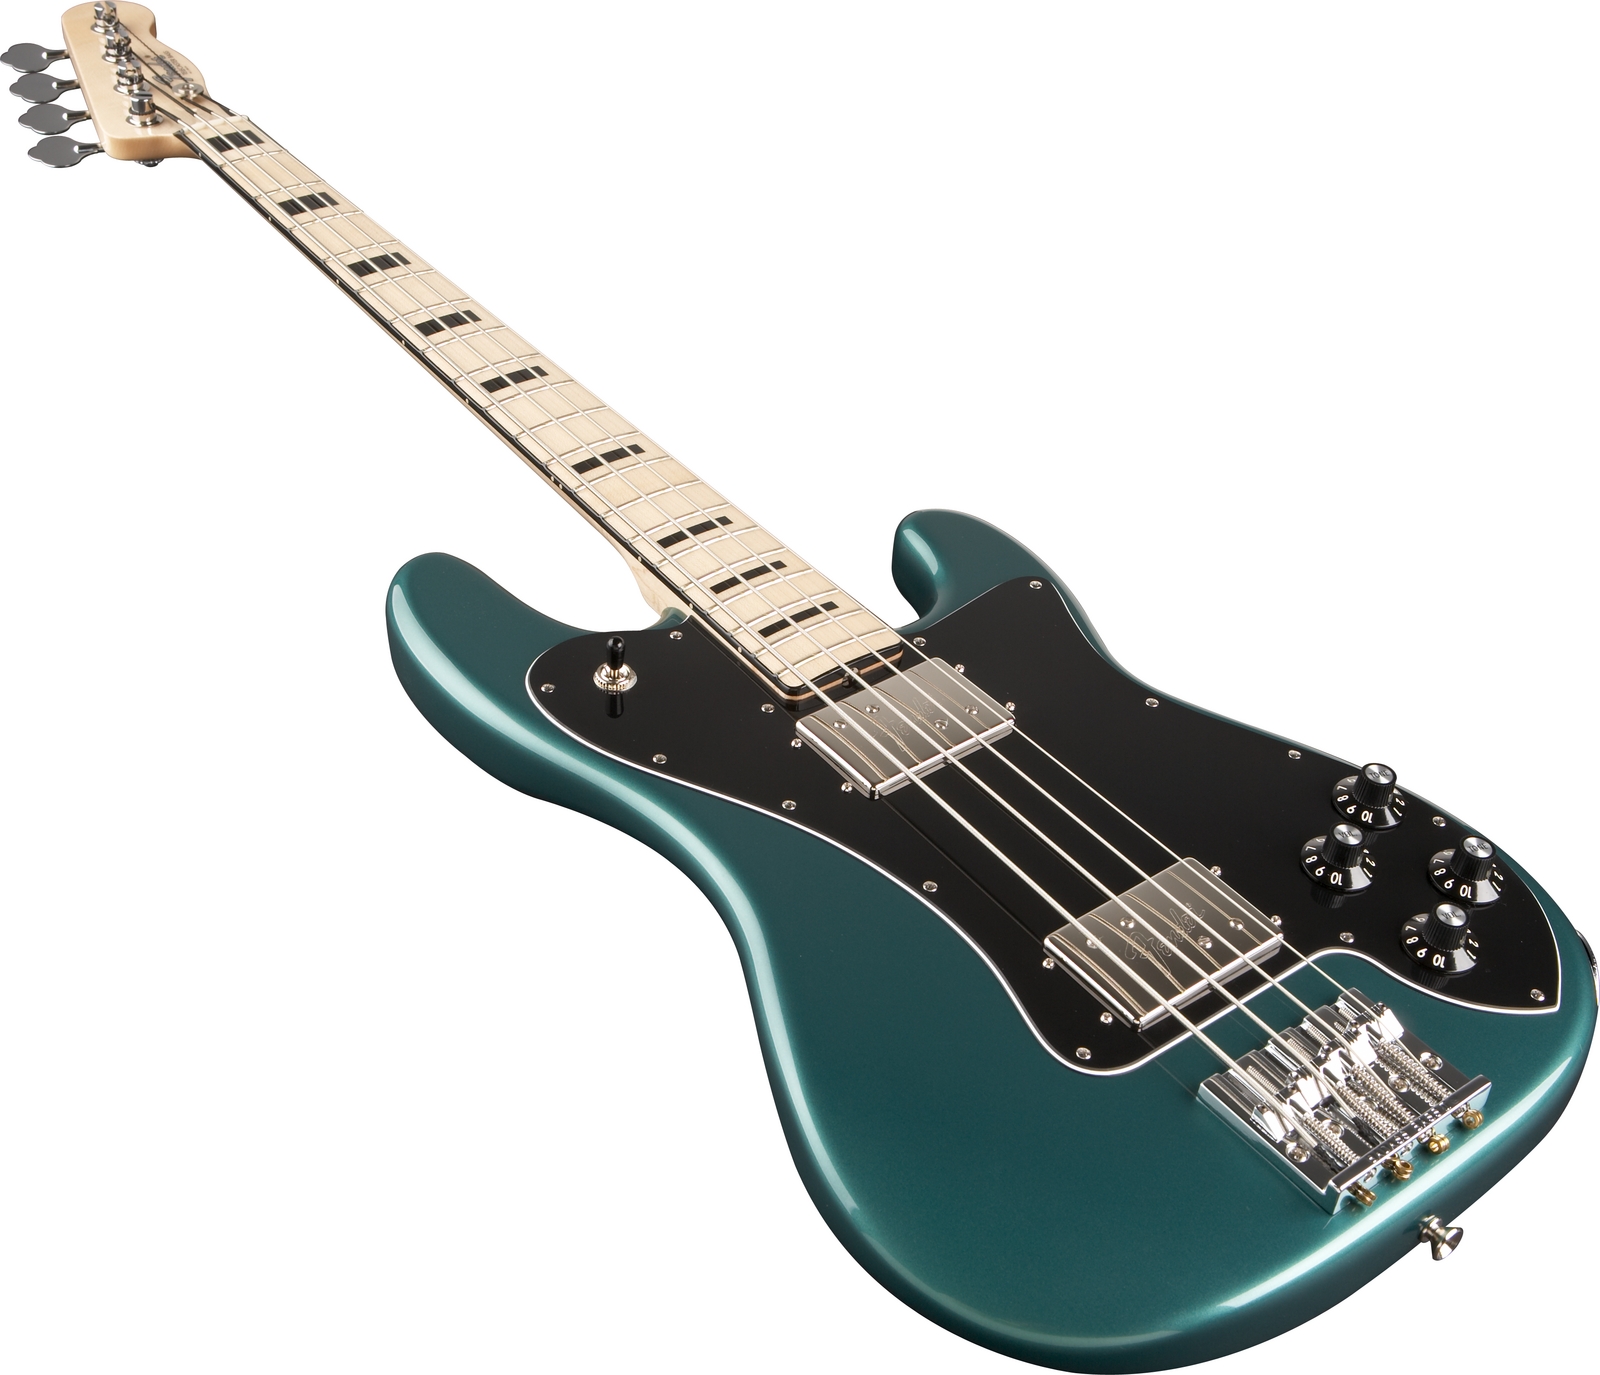 Fender Telecaster Bass Guitar